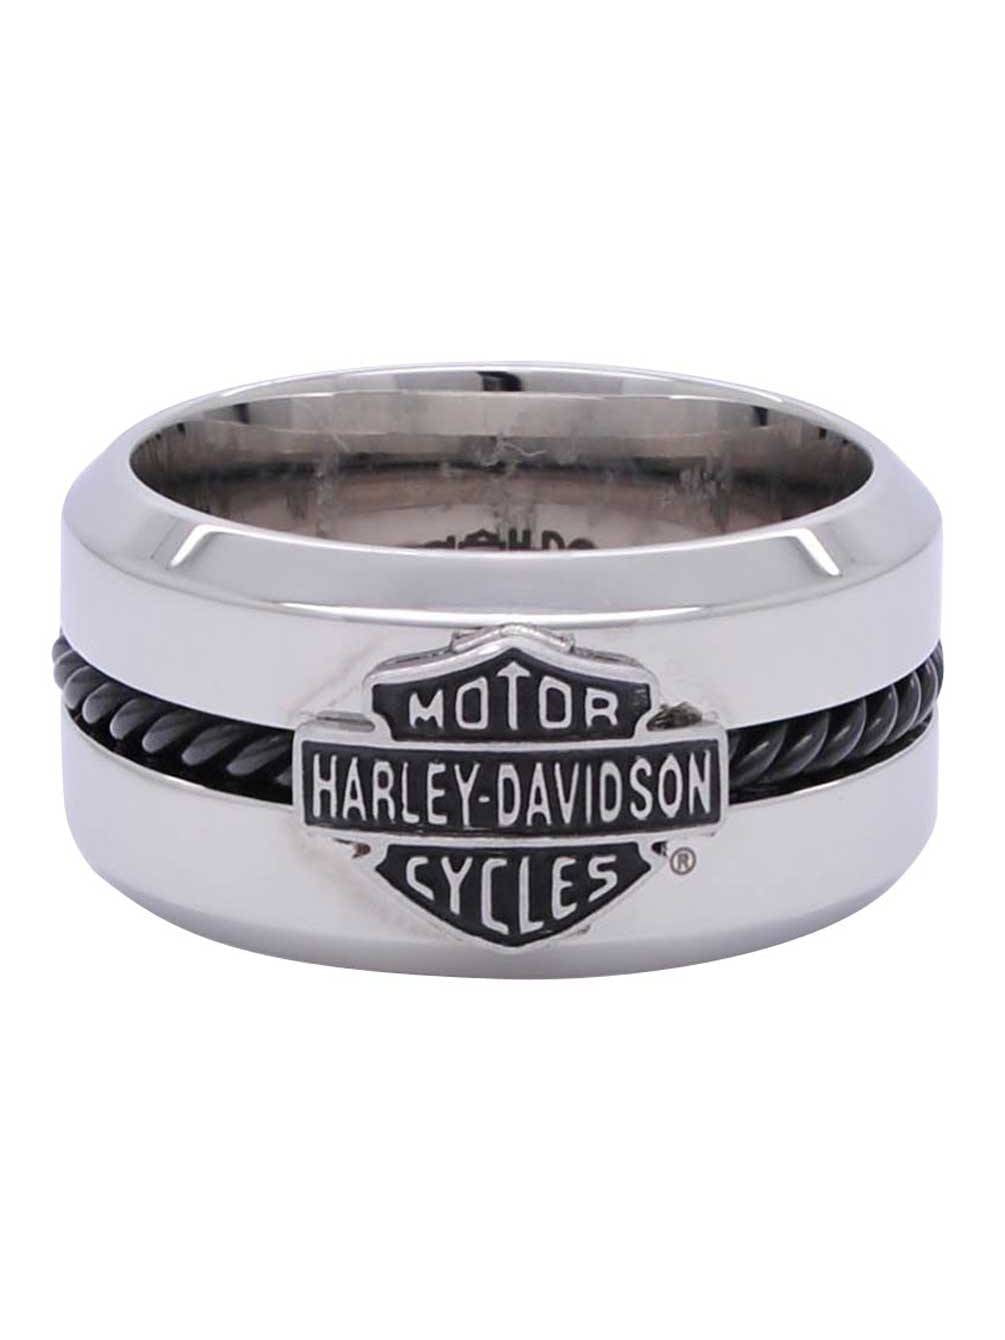 Diamond Harley davidson rubber wedding rings for Engagement Wedding Ring